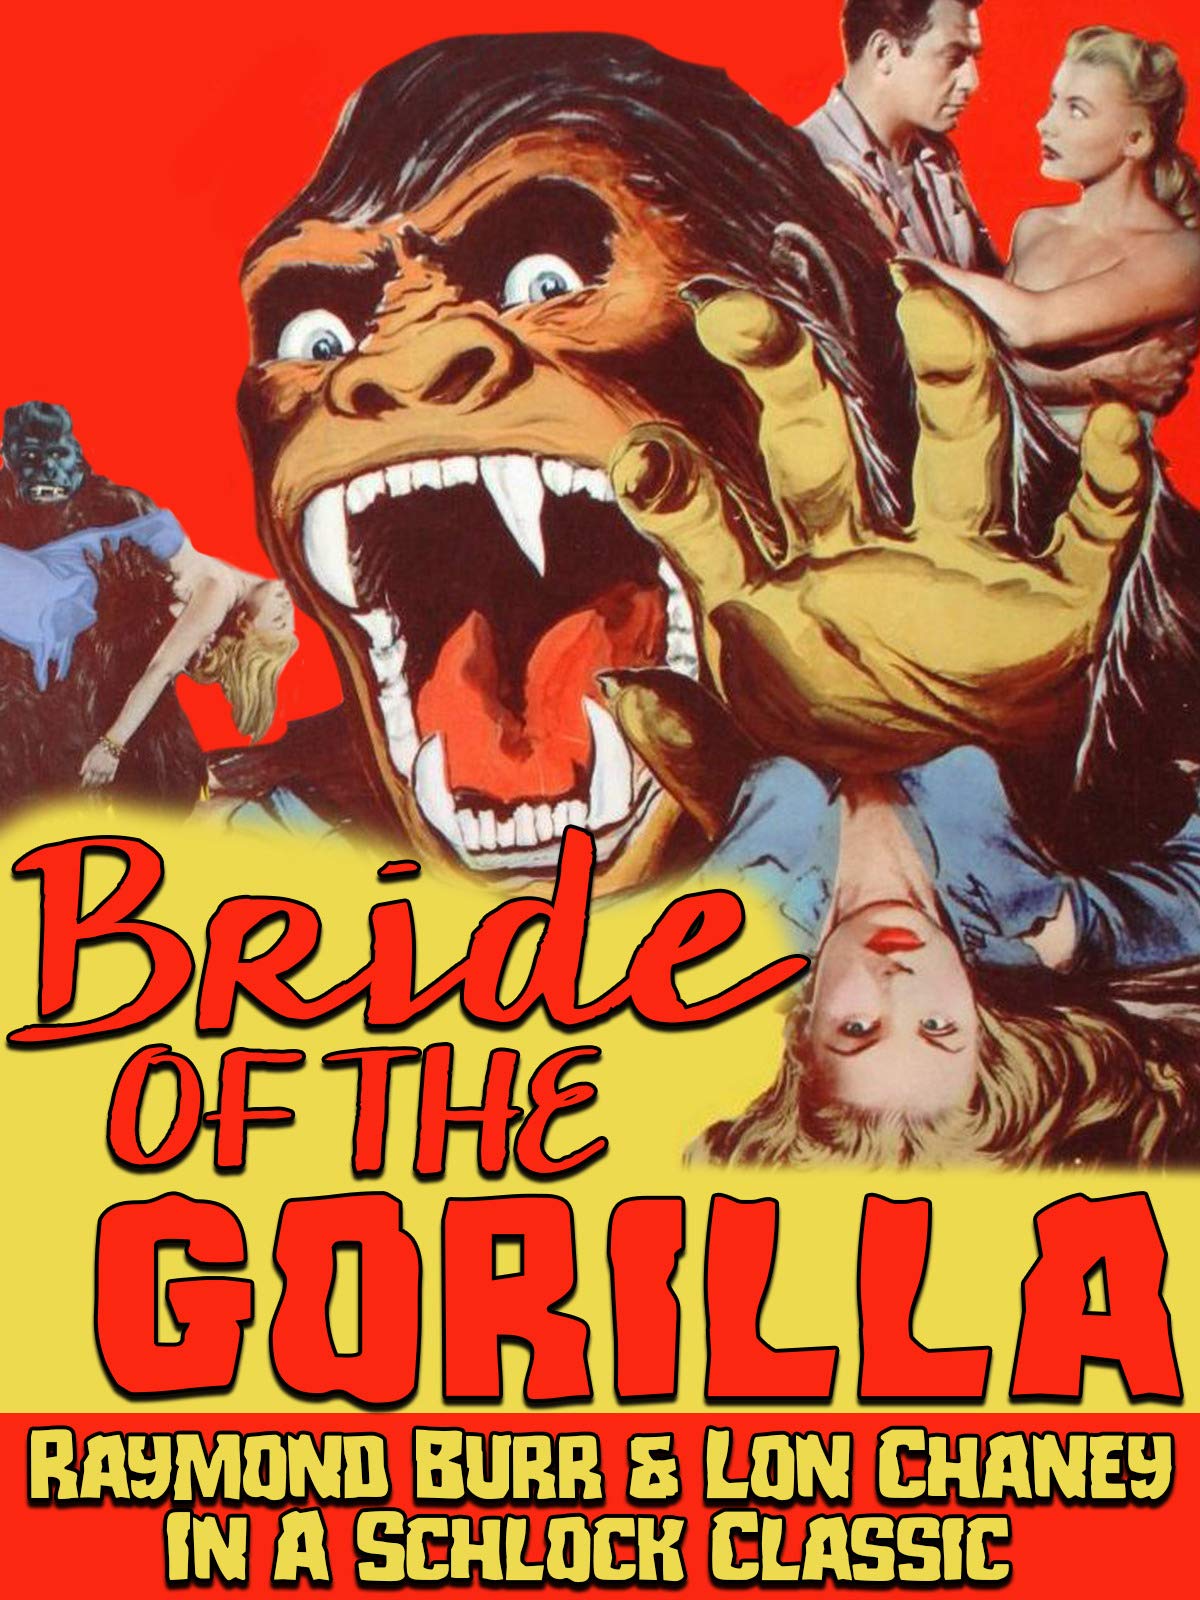 Bride of the Gorilla (1951) starring Raymond Burr, Barbara Payton, Lon Chaney, Jr., Tom Conway